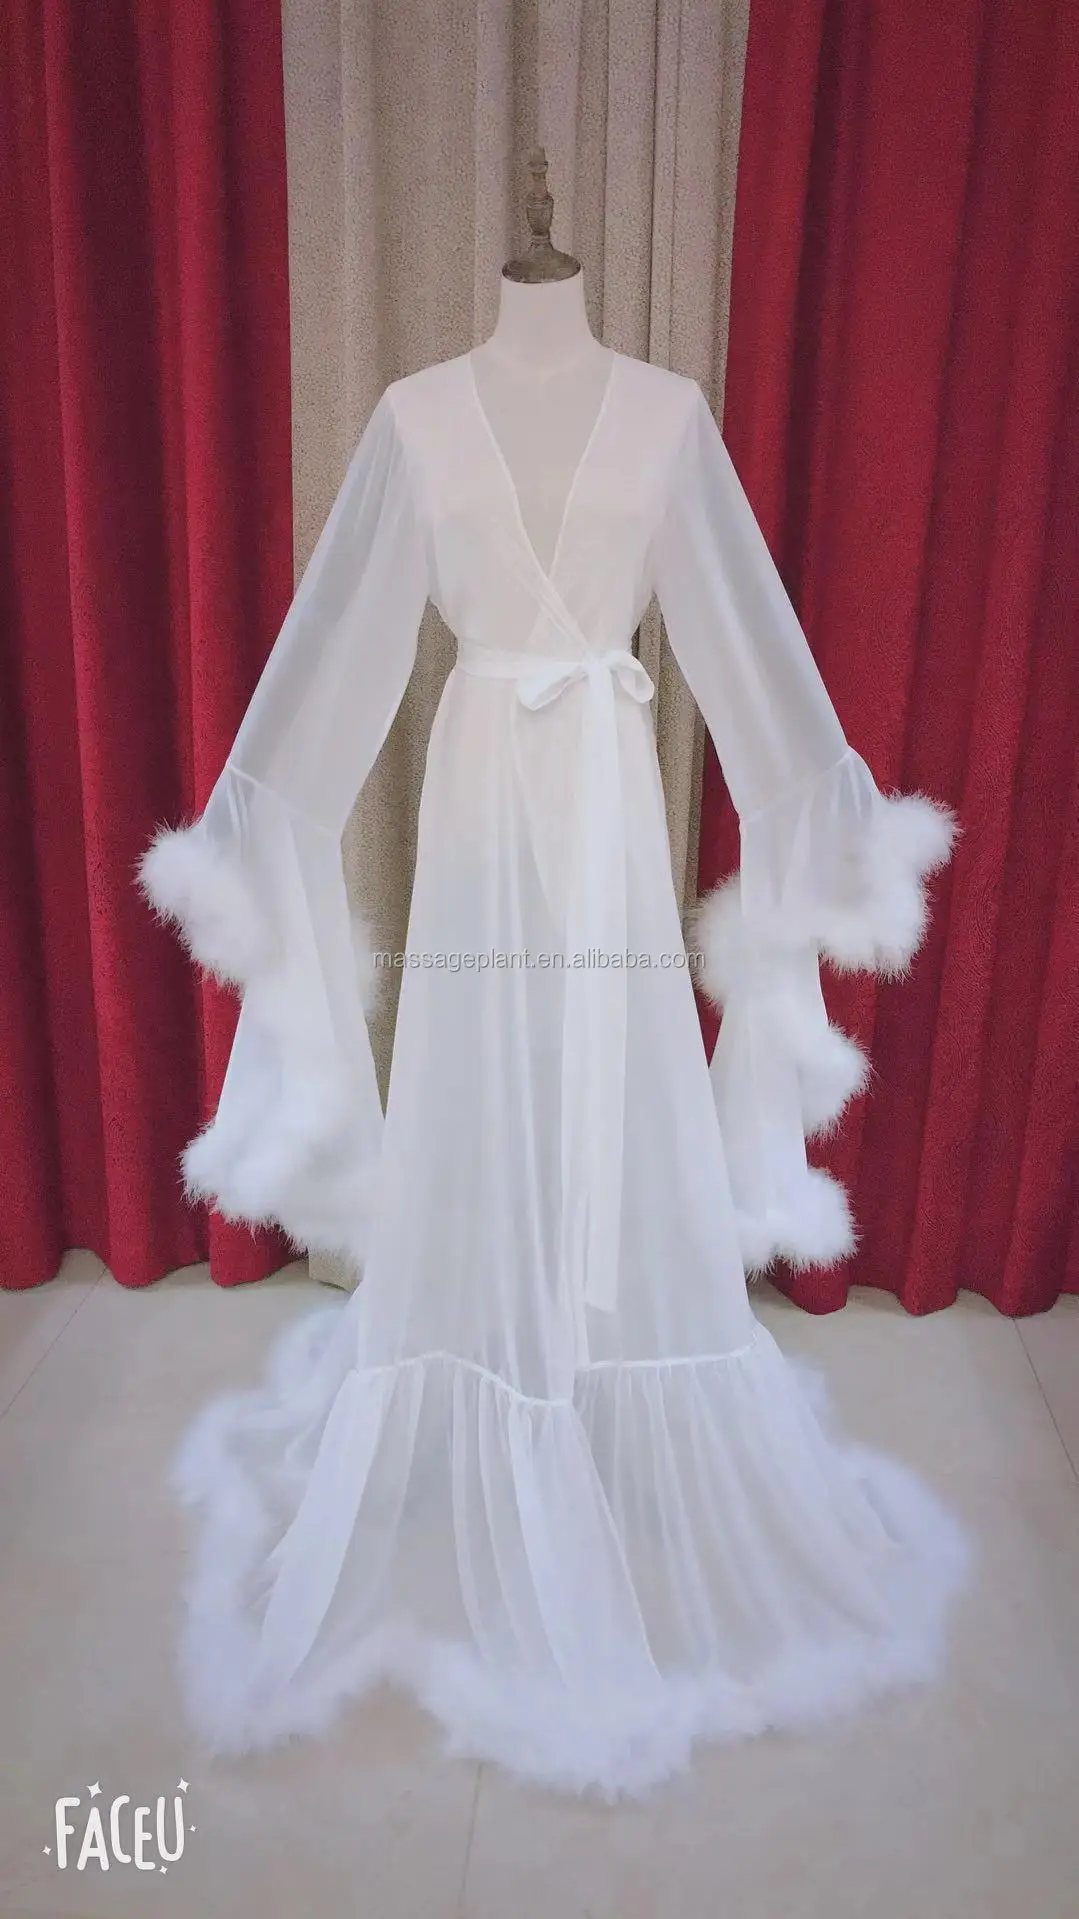 white silk dressing gown